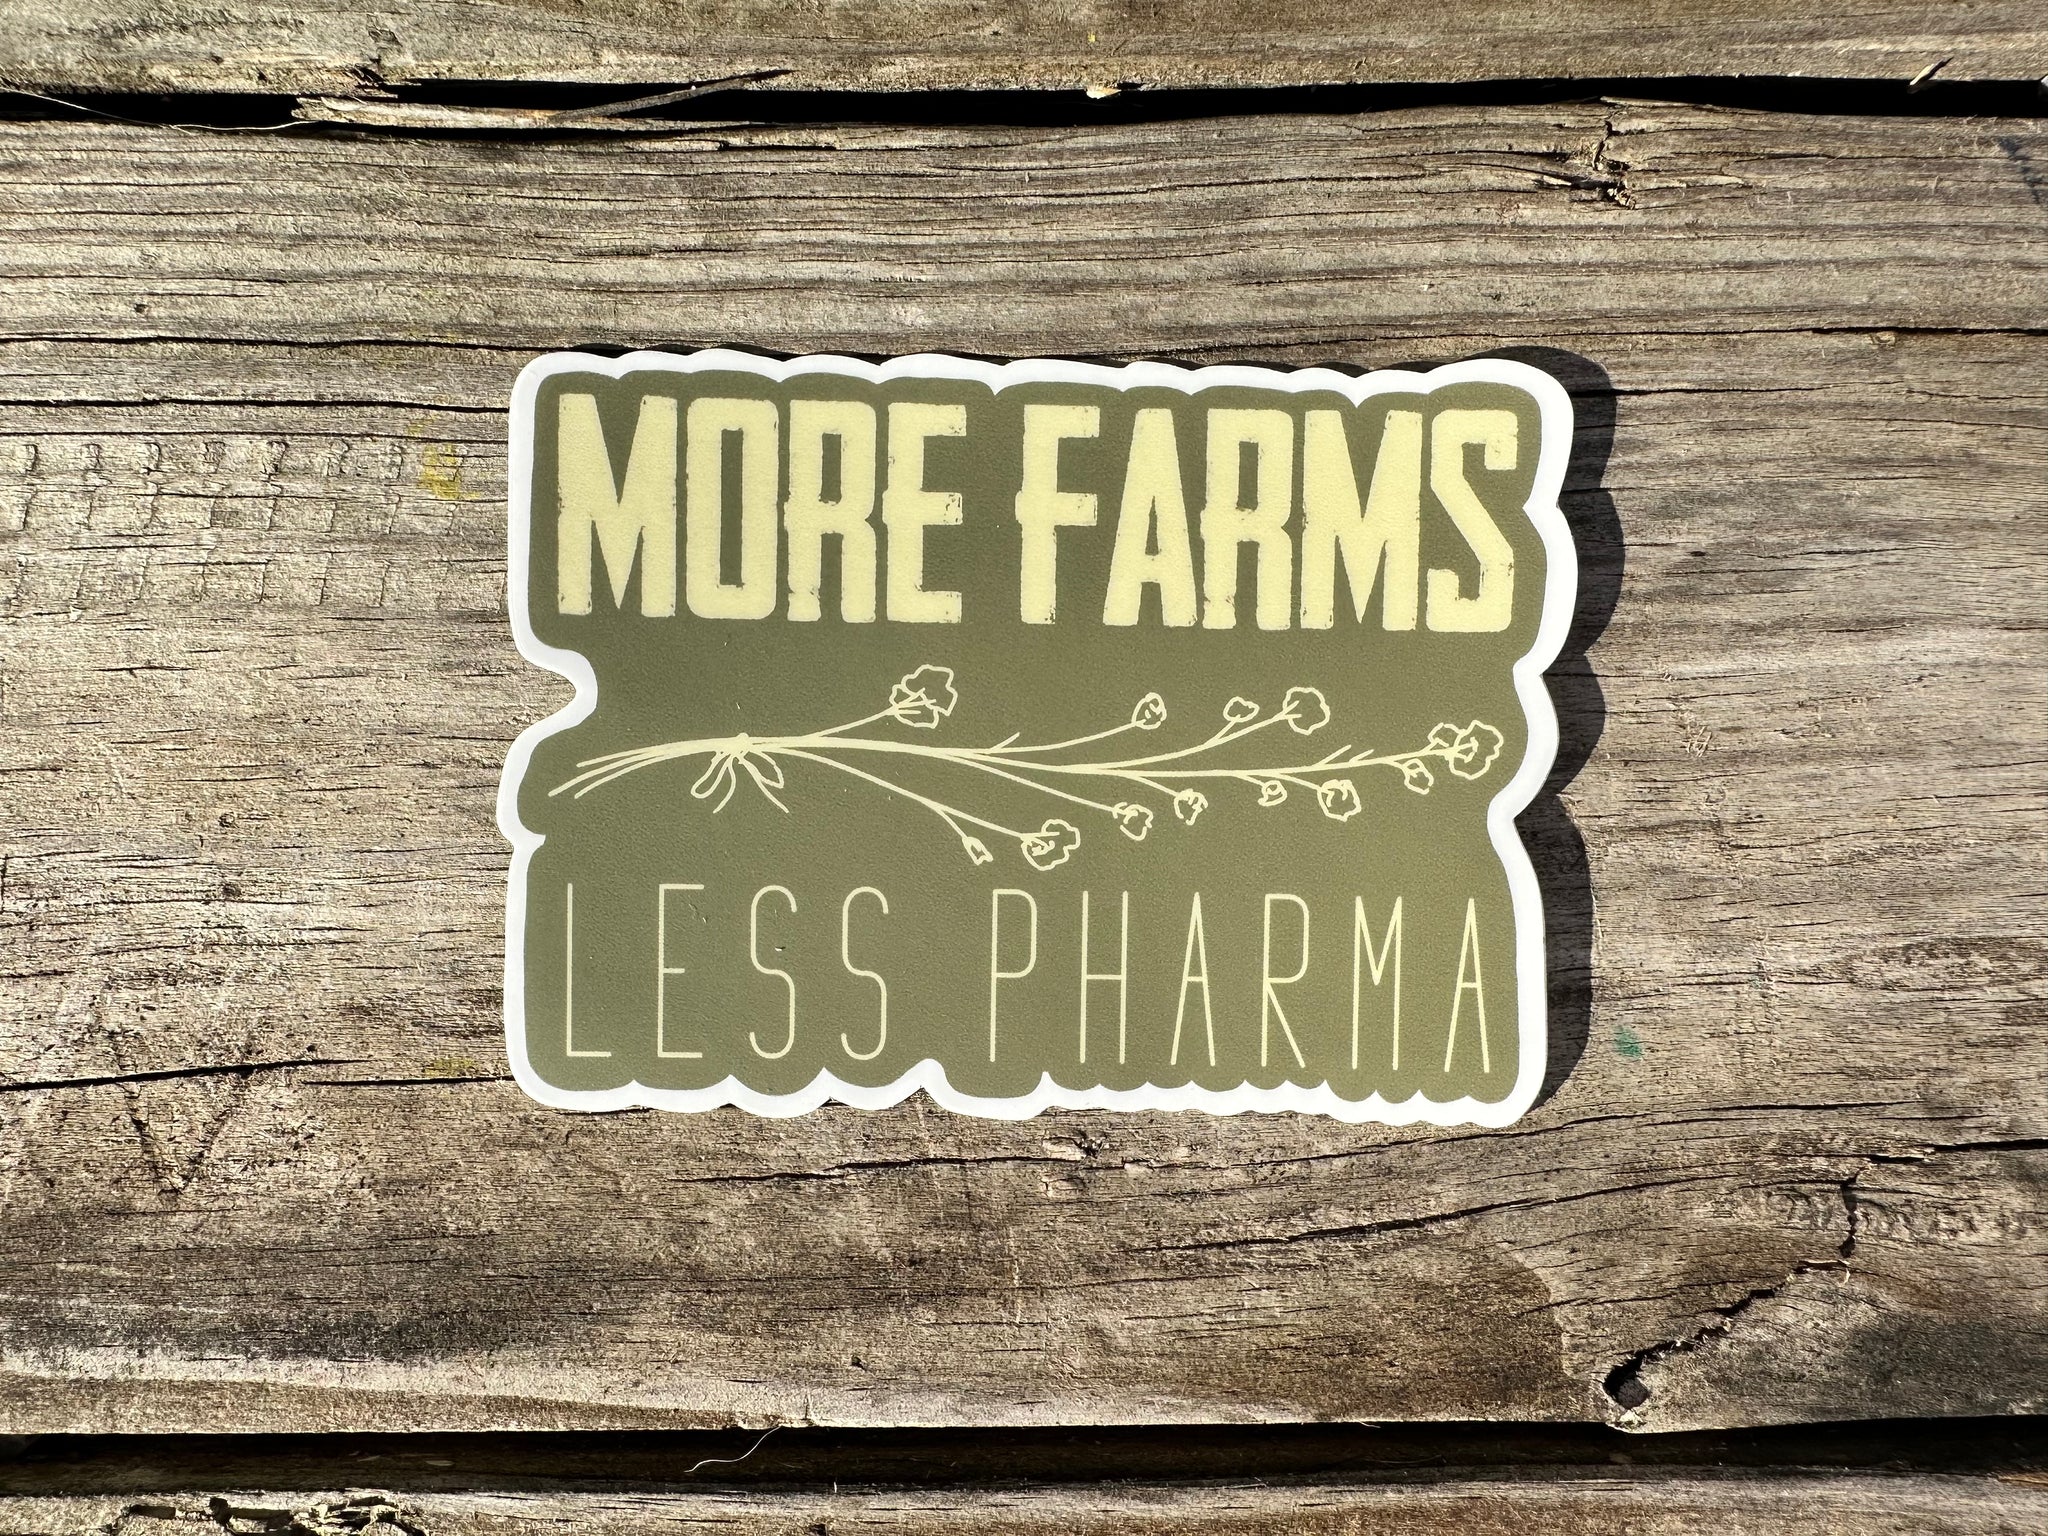 More Farms Less Pharma Sticker